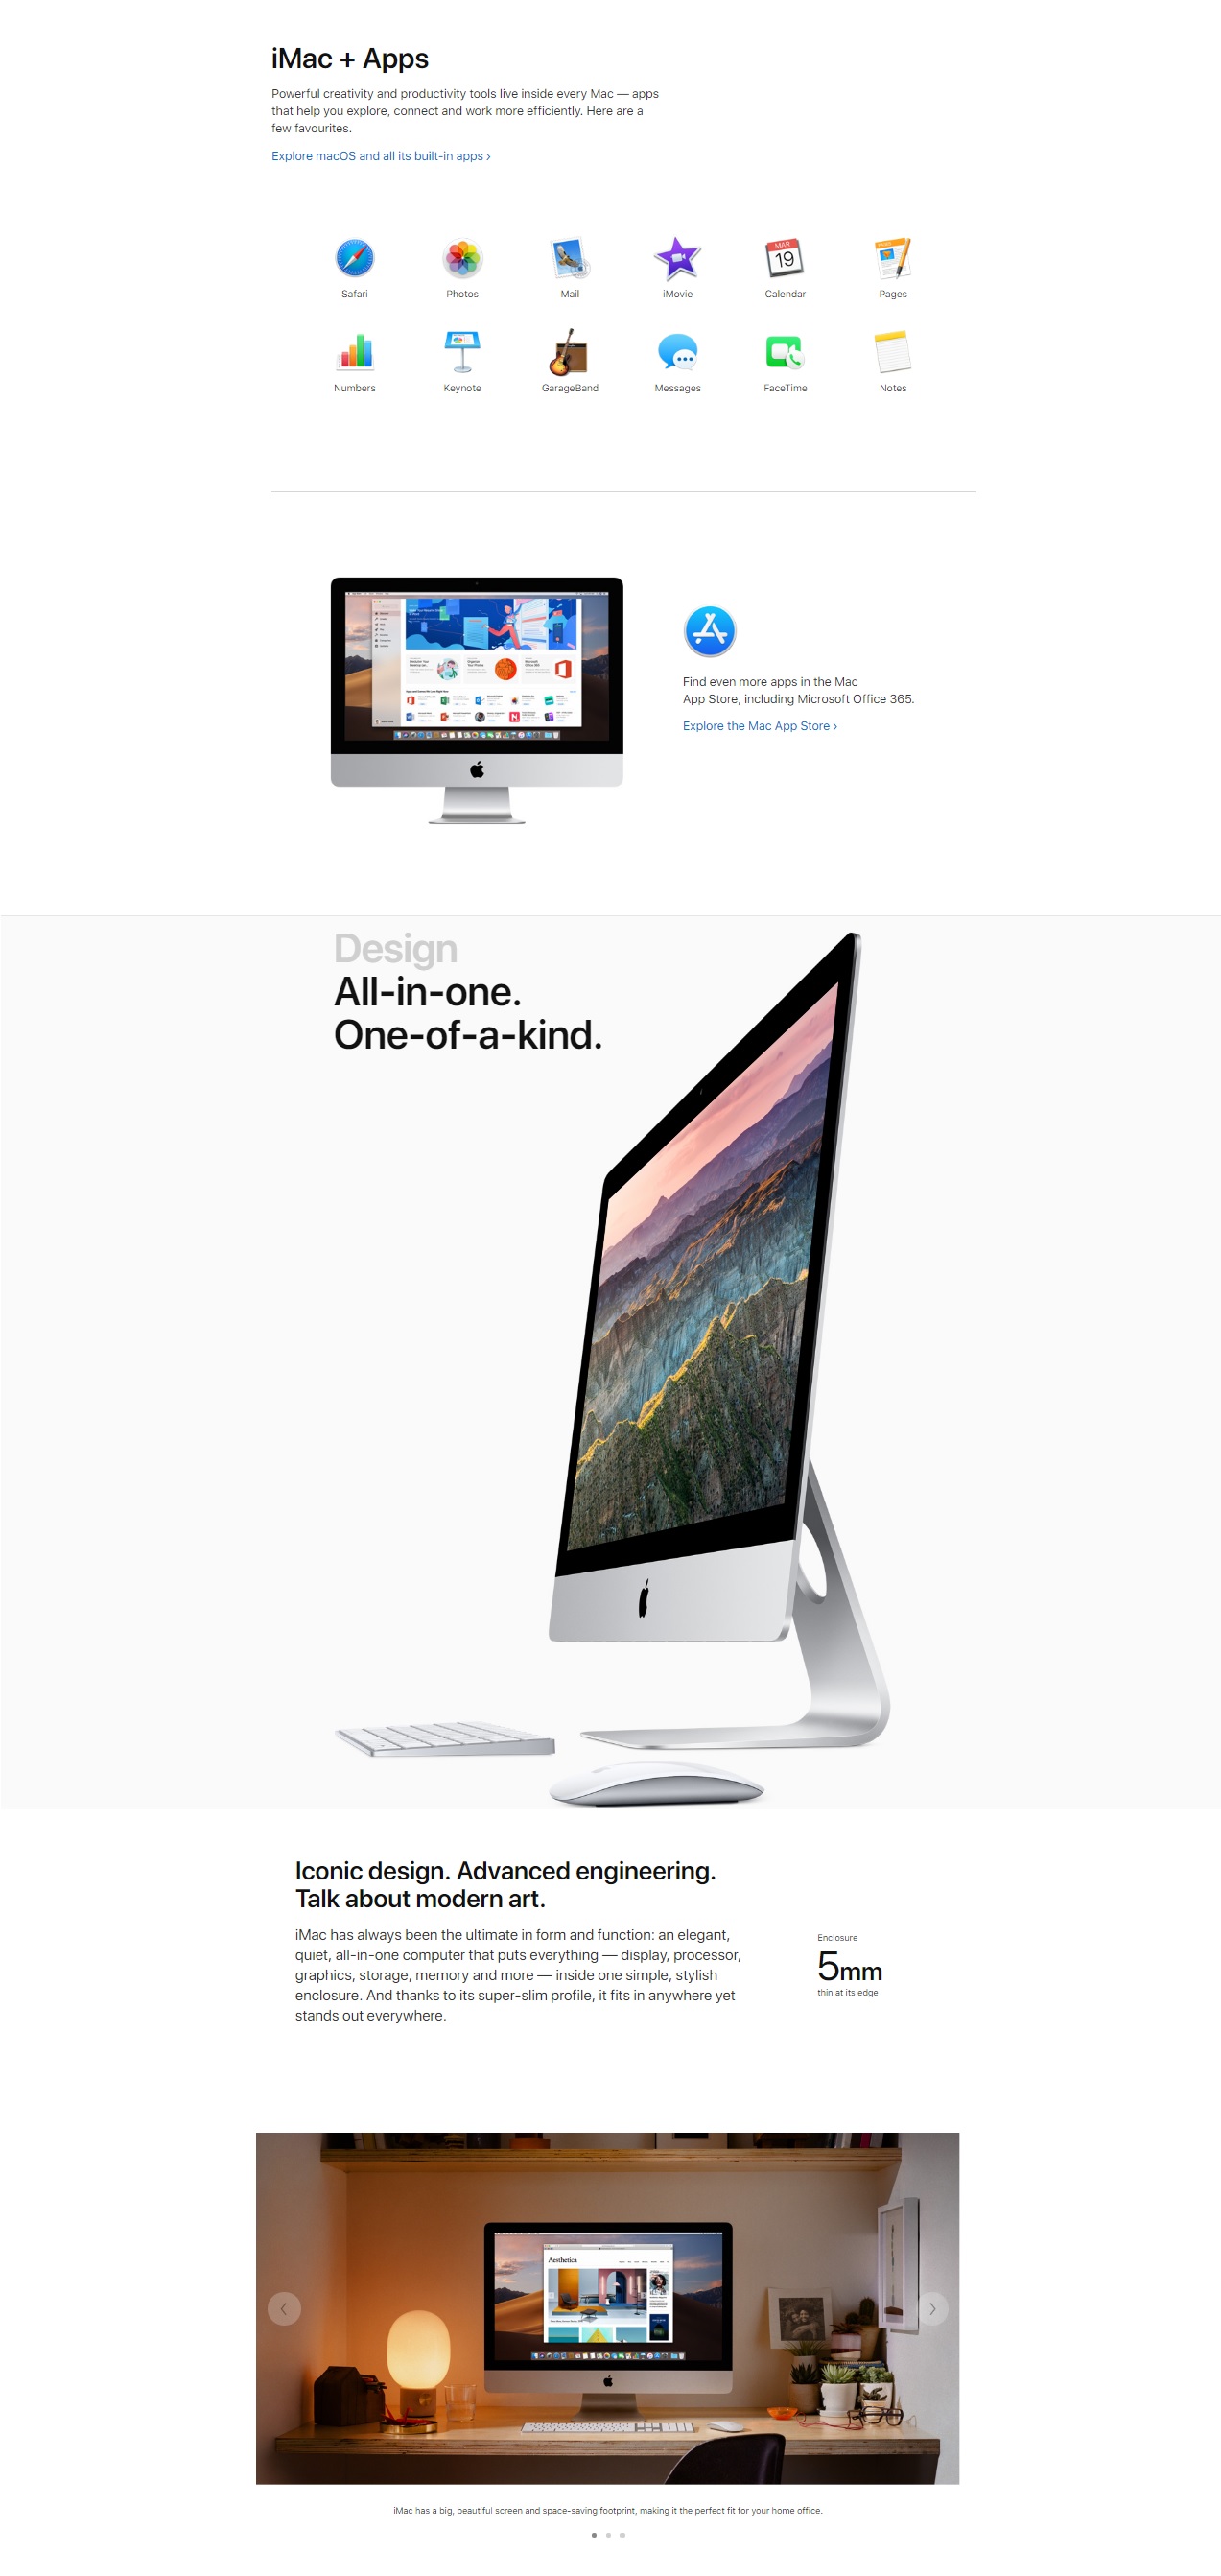 27-inch iMac Retina 5K Display 3.7GHz 6-Core Processor with Turbo Boost up to 4.6GHz ...1273 x 2685